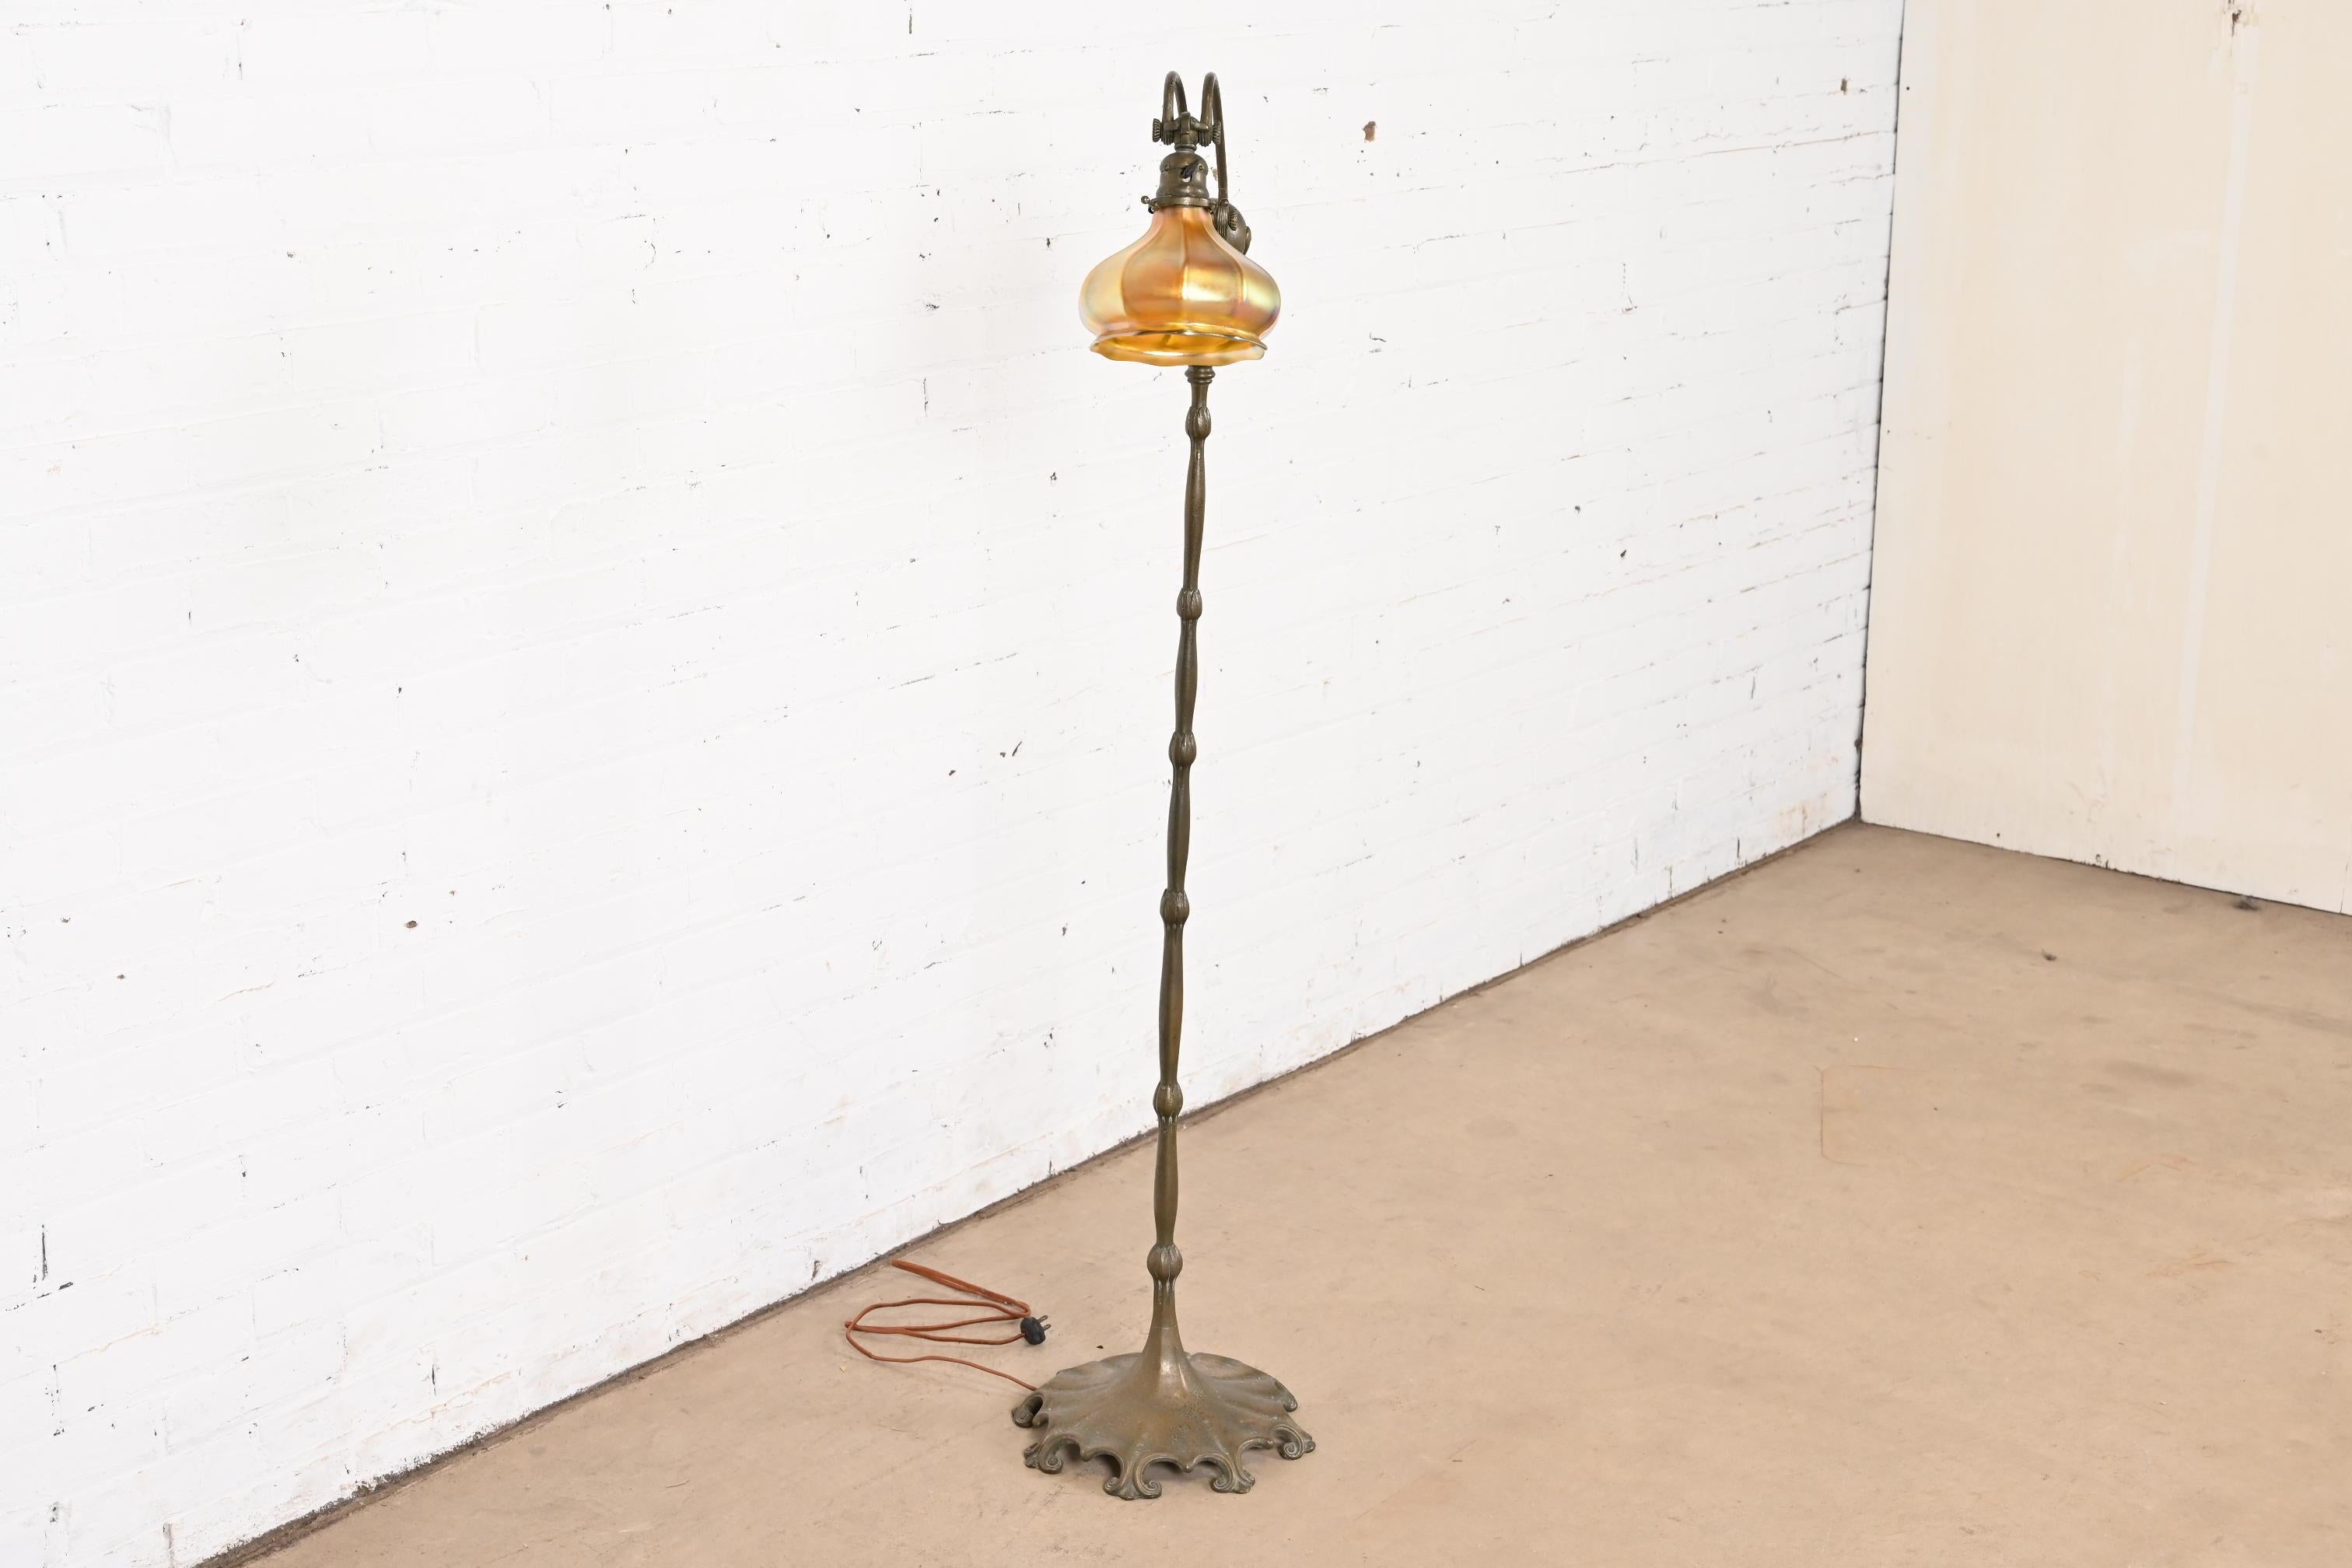 American Tiffany Studios New York Bronze Counterbalance Floor Lamp, Circa 1910 For Sale